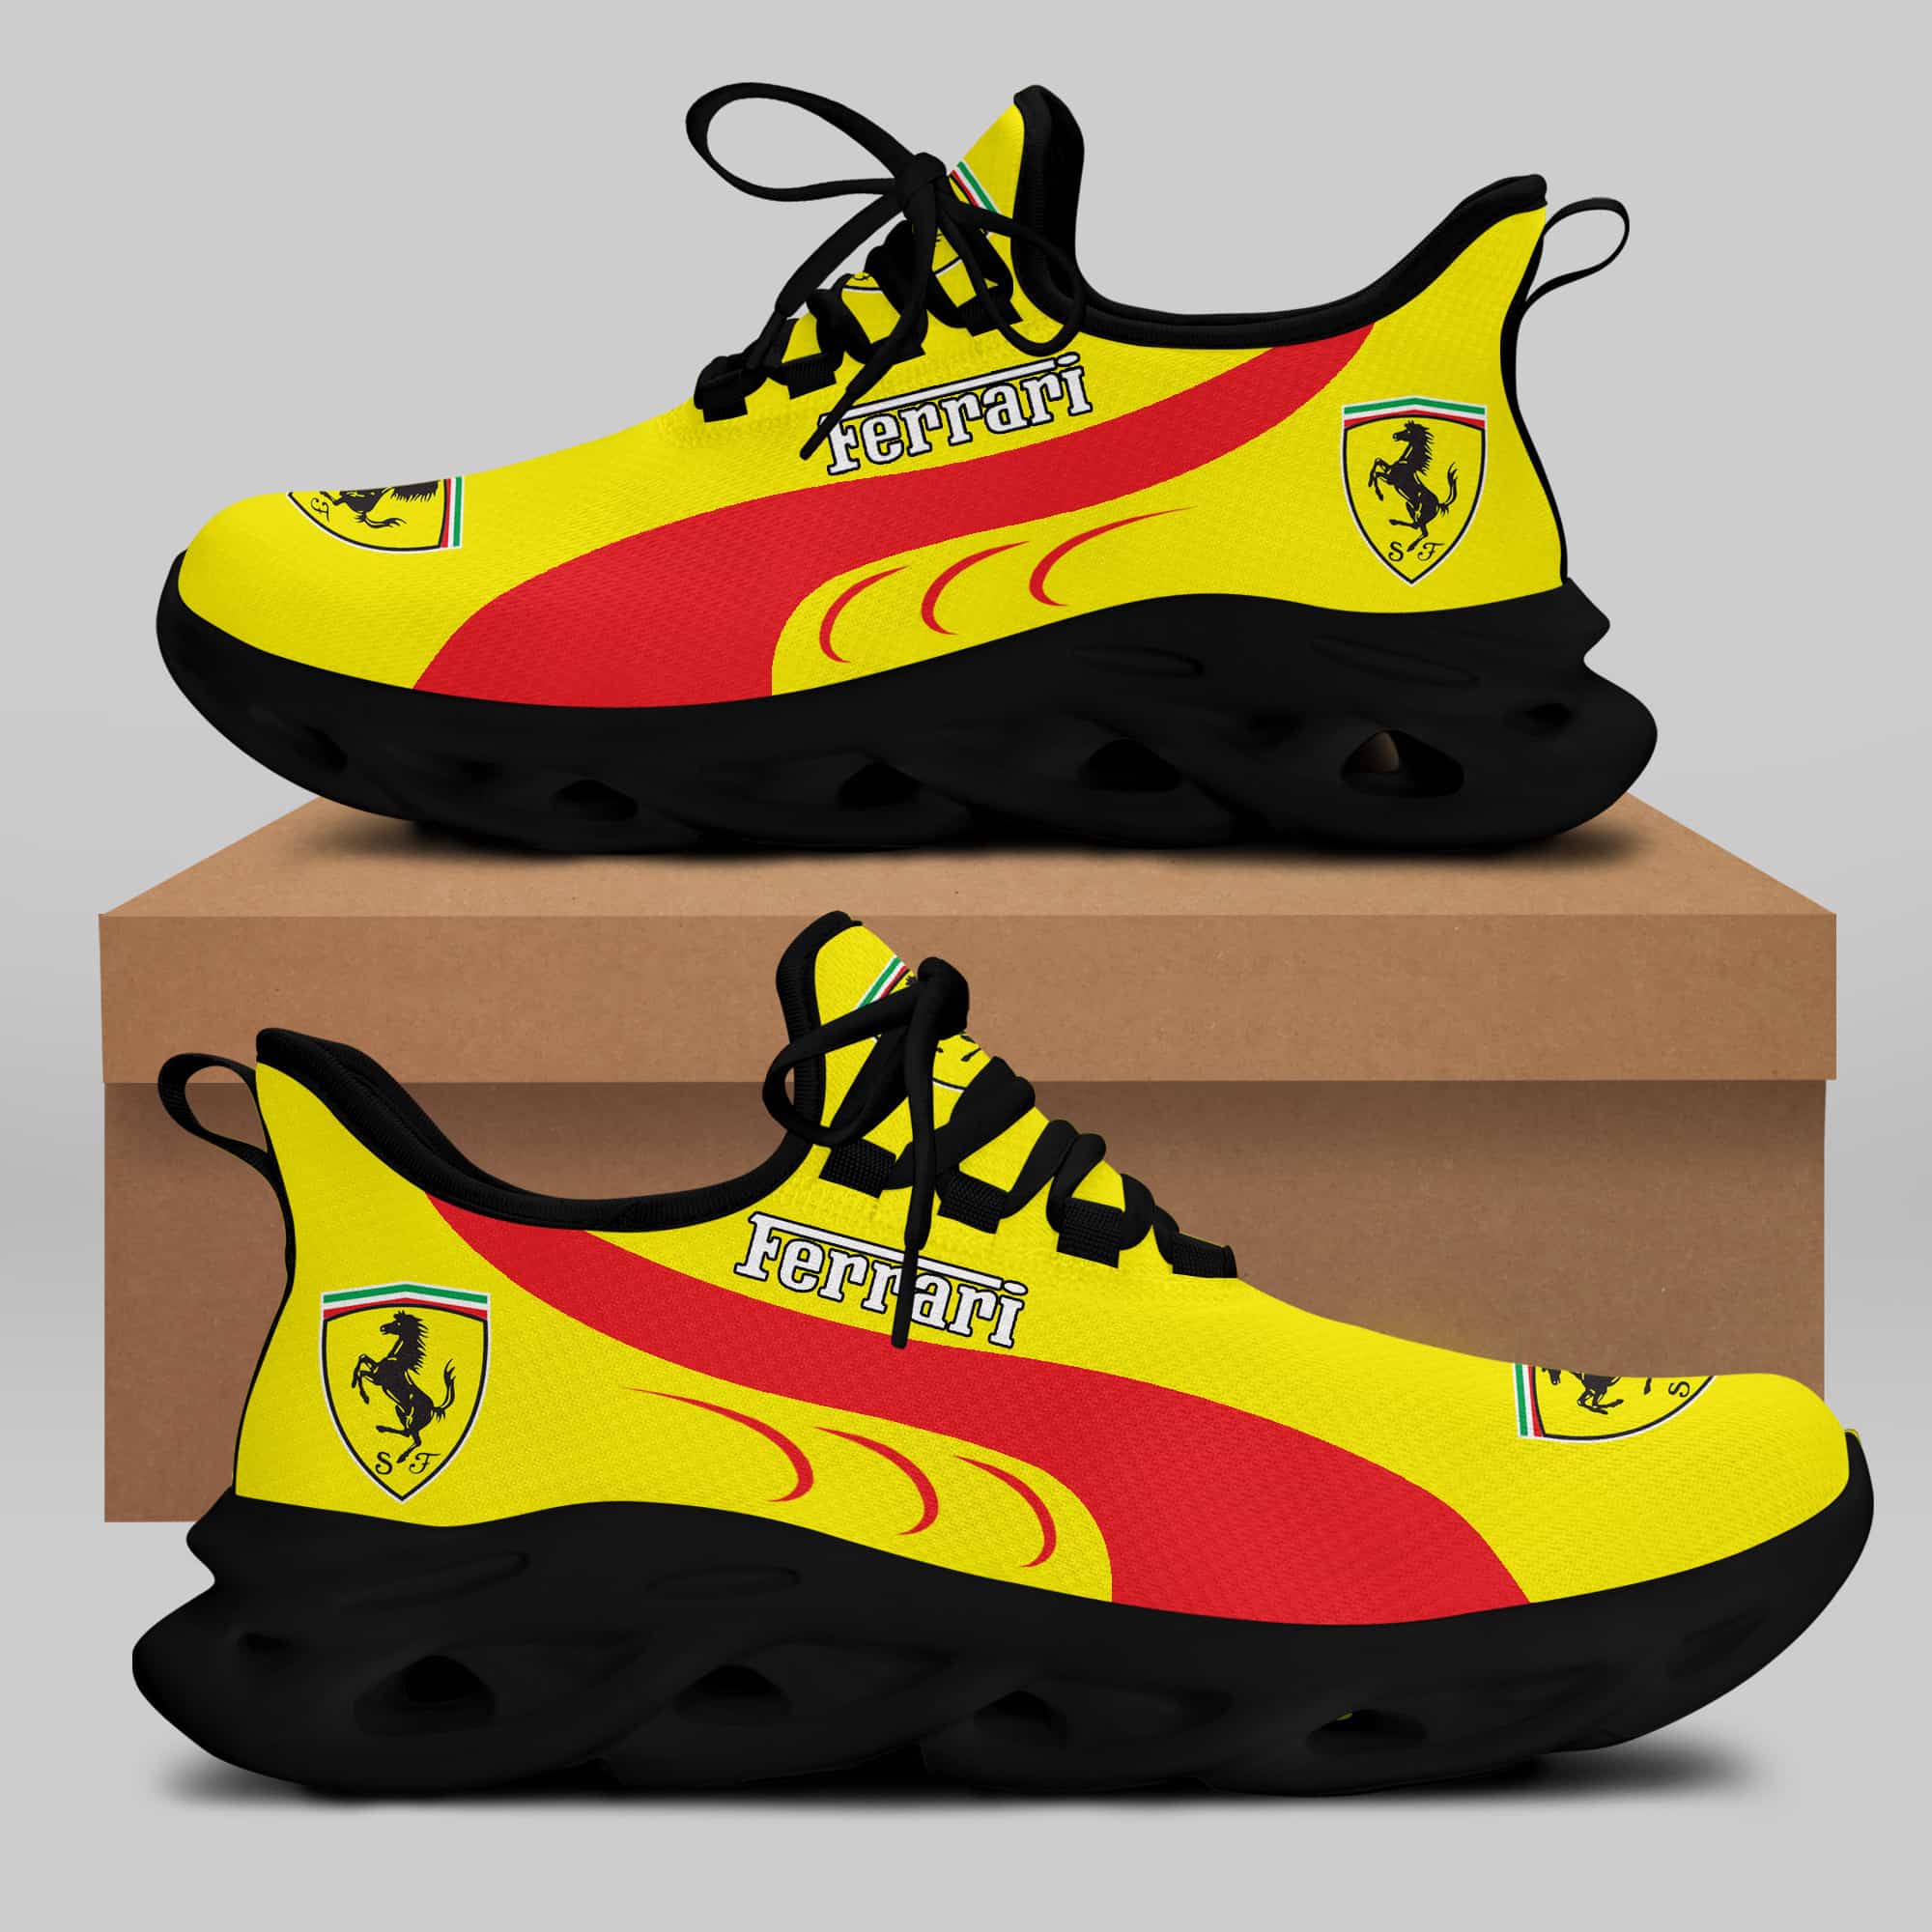 Ferrari Sneaker Running Shoes Max Soul Shoes Sneakers Ver 5 1